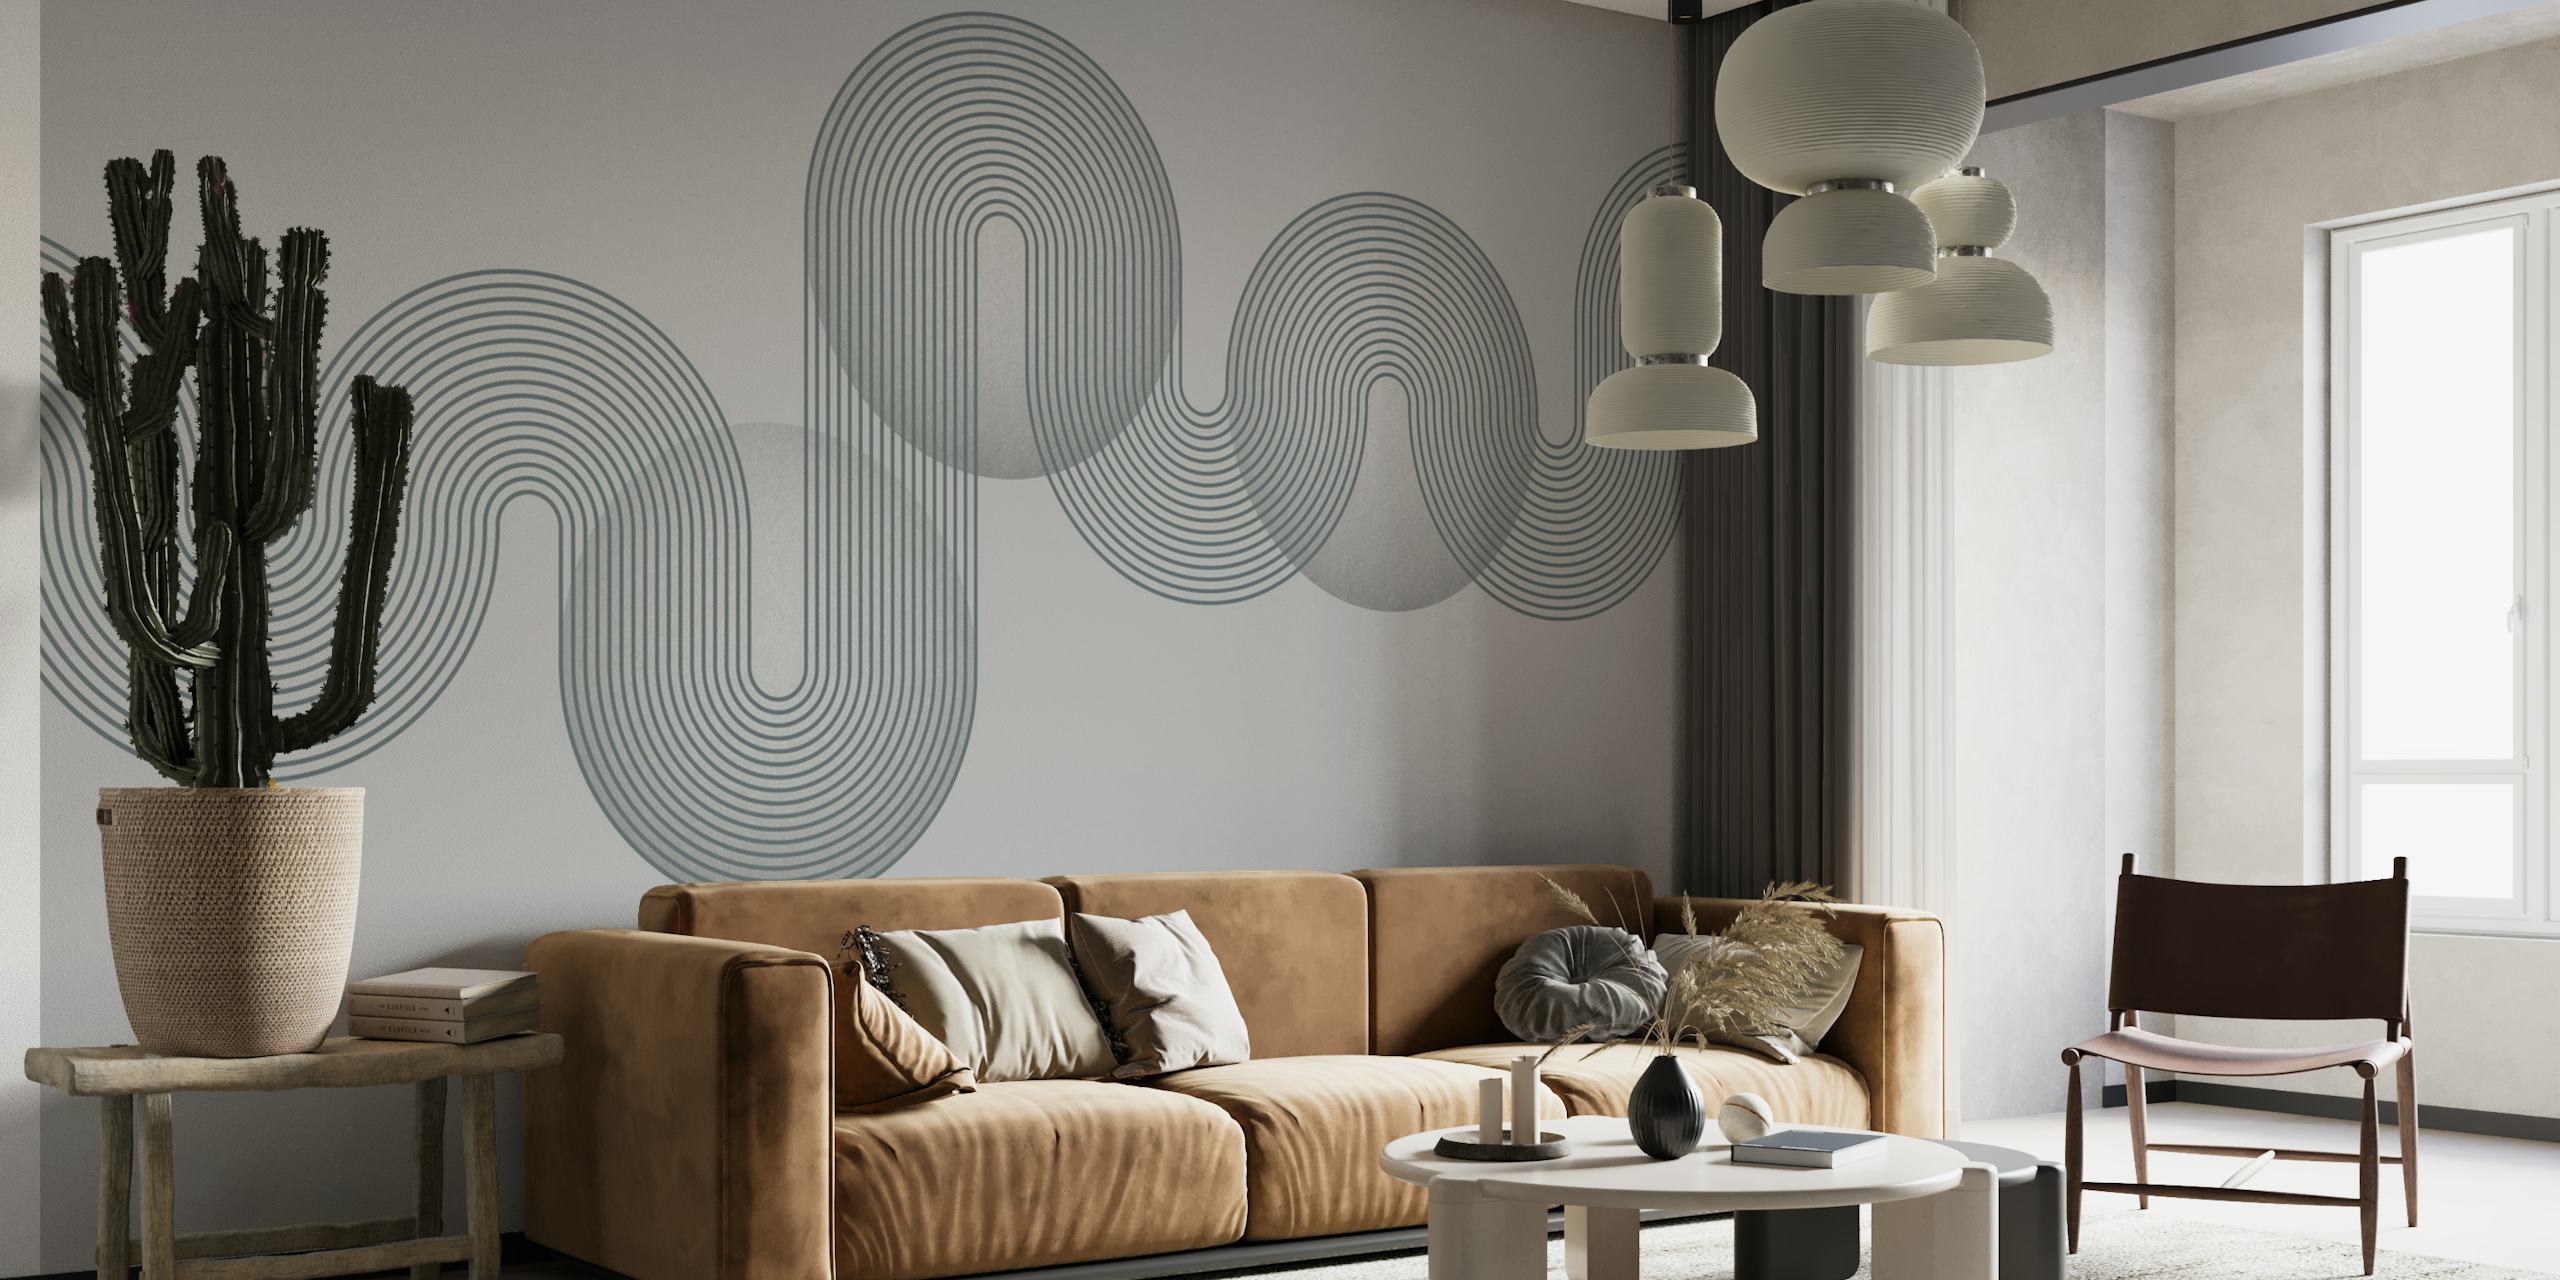 Mural de parede minimalista cinza Bauhaus com formas geométricas abstratas